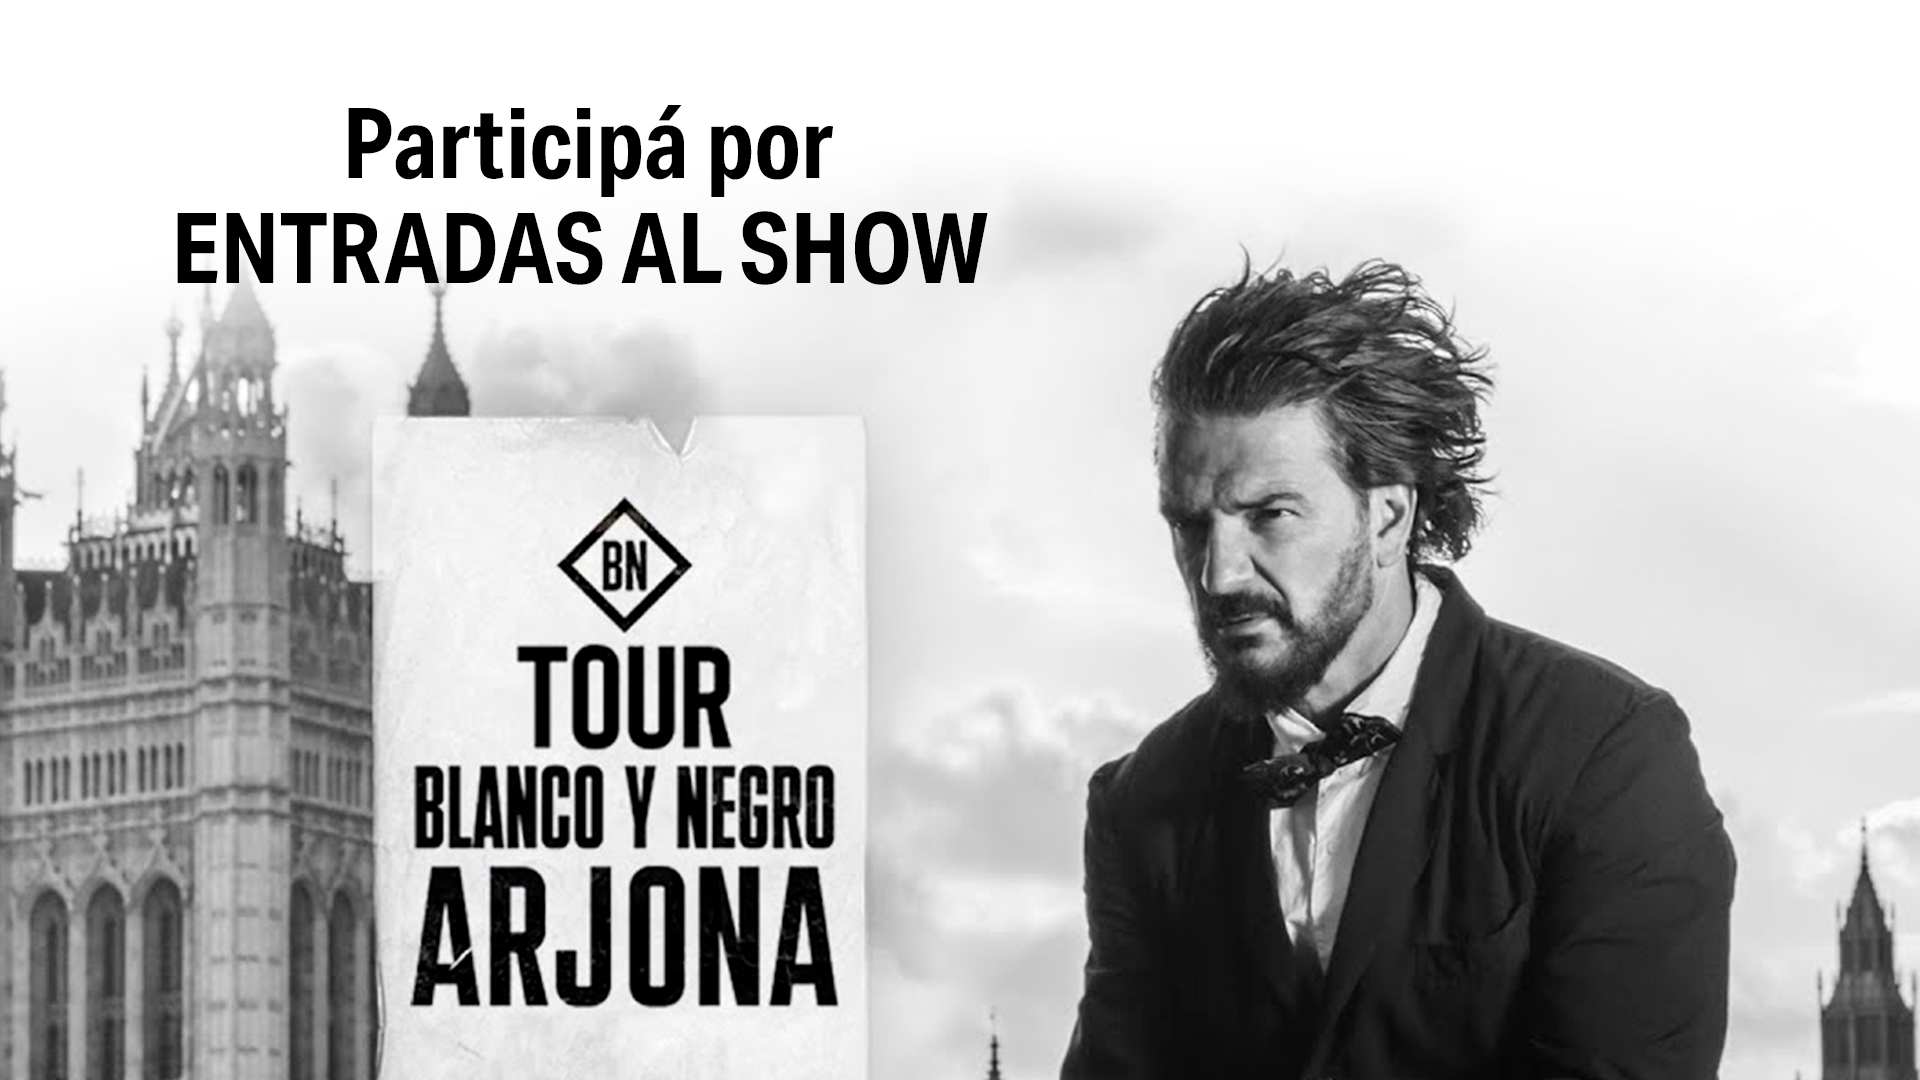 Ganate entradas para ir a ver a Ricardo Arjona en Mendoza Canal 9